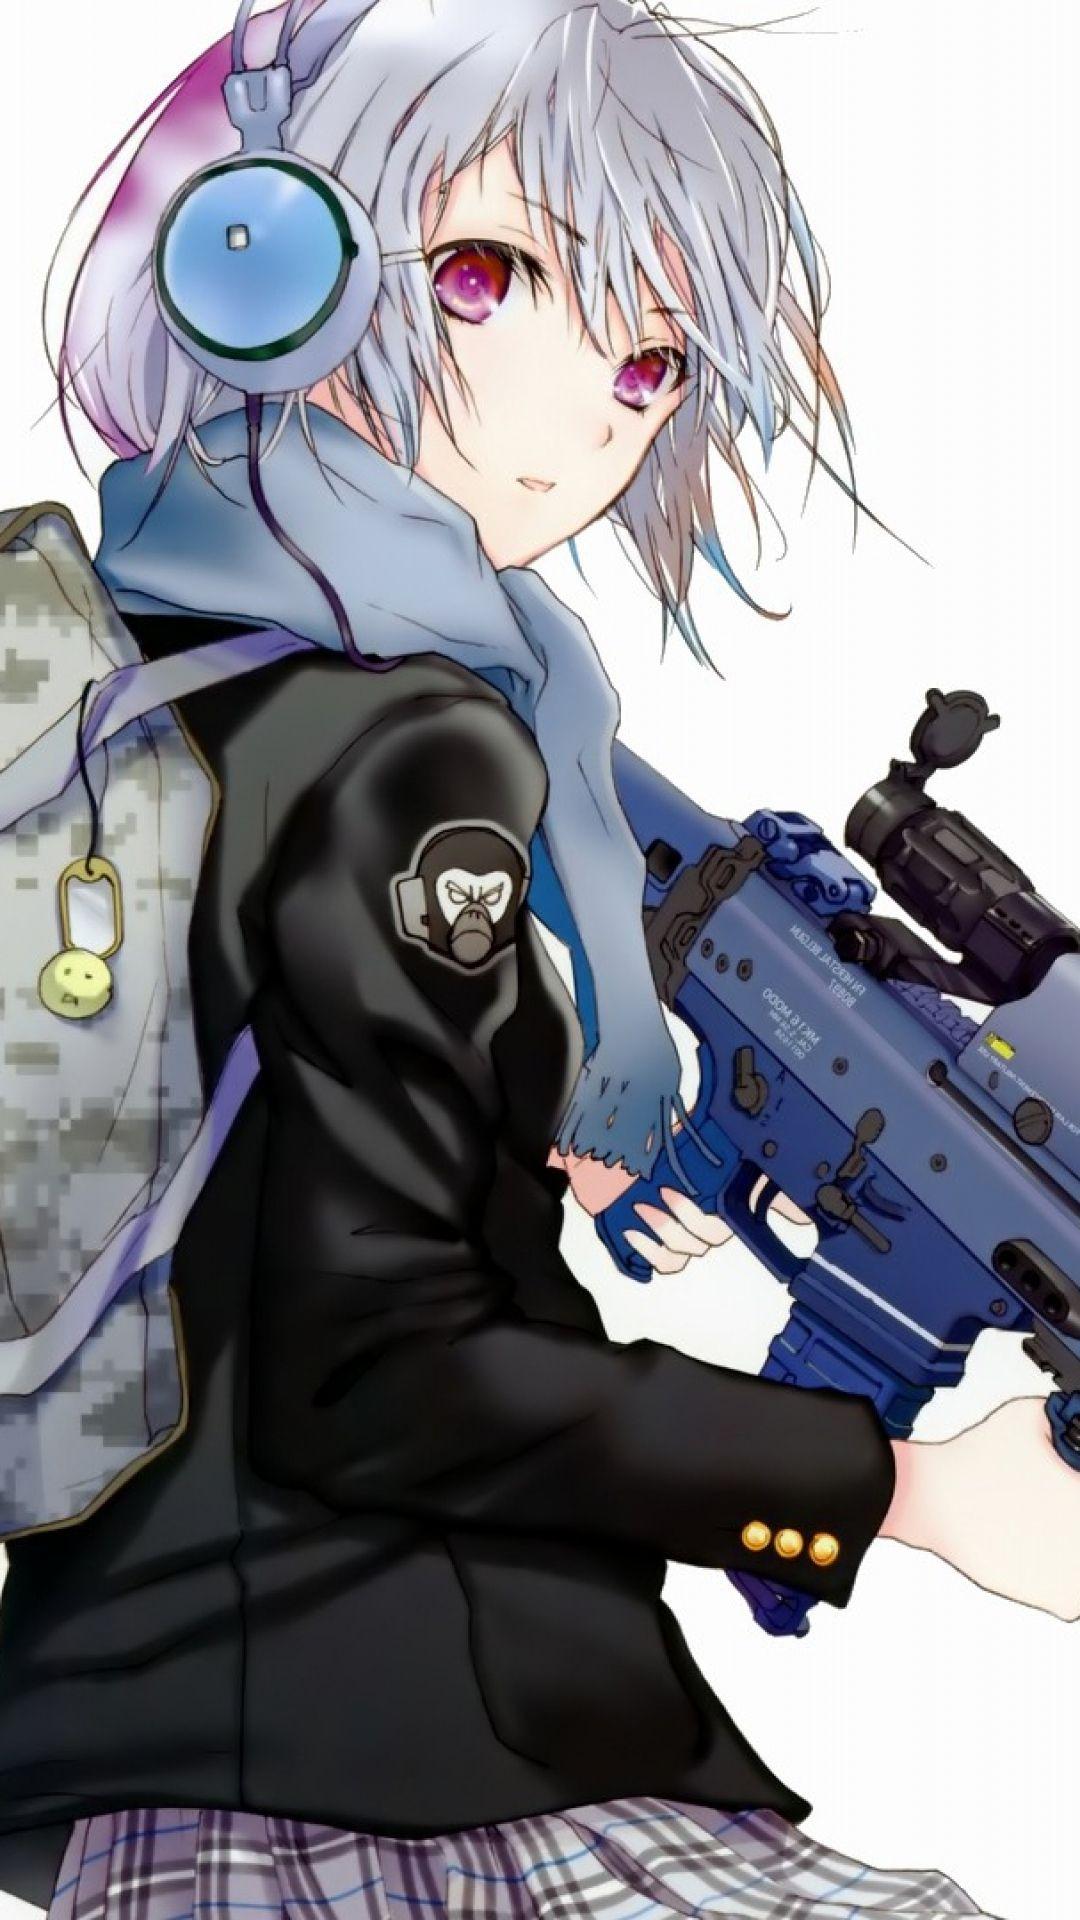 Anime Wallpaper 1080x1920. Anime war in 2019